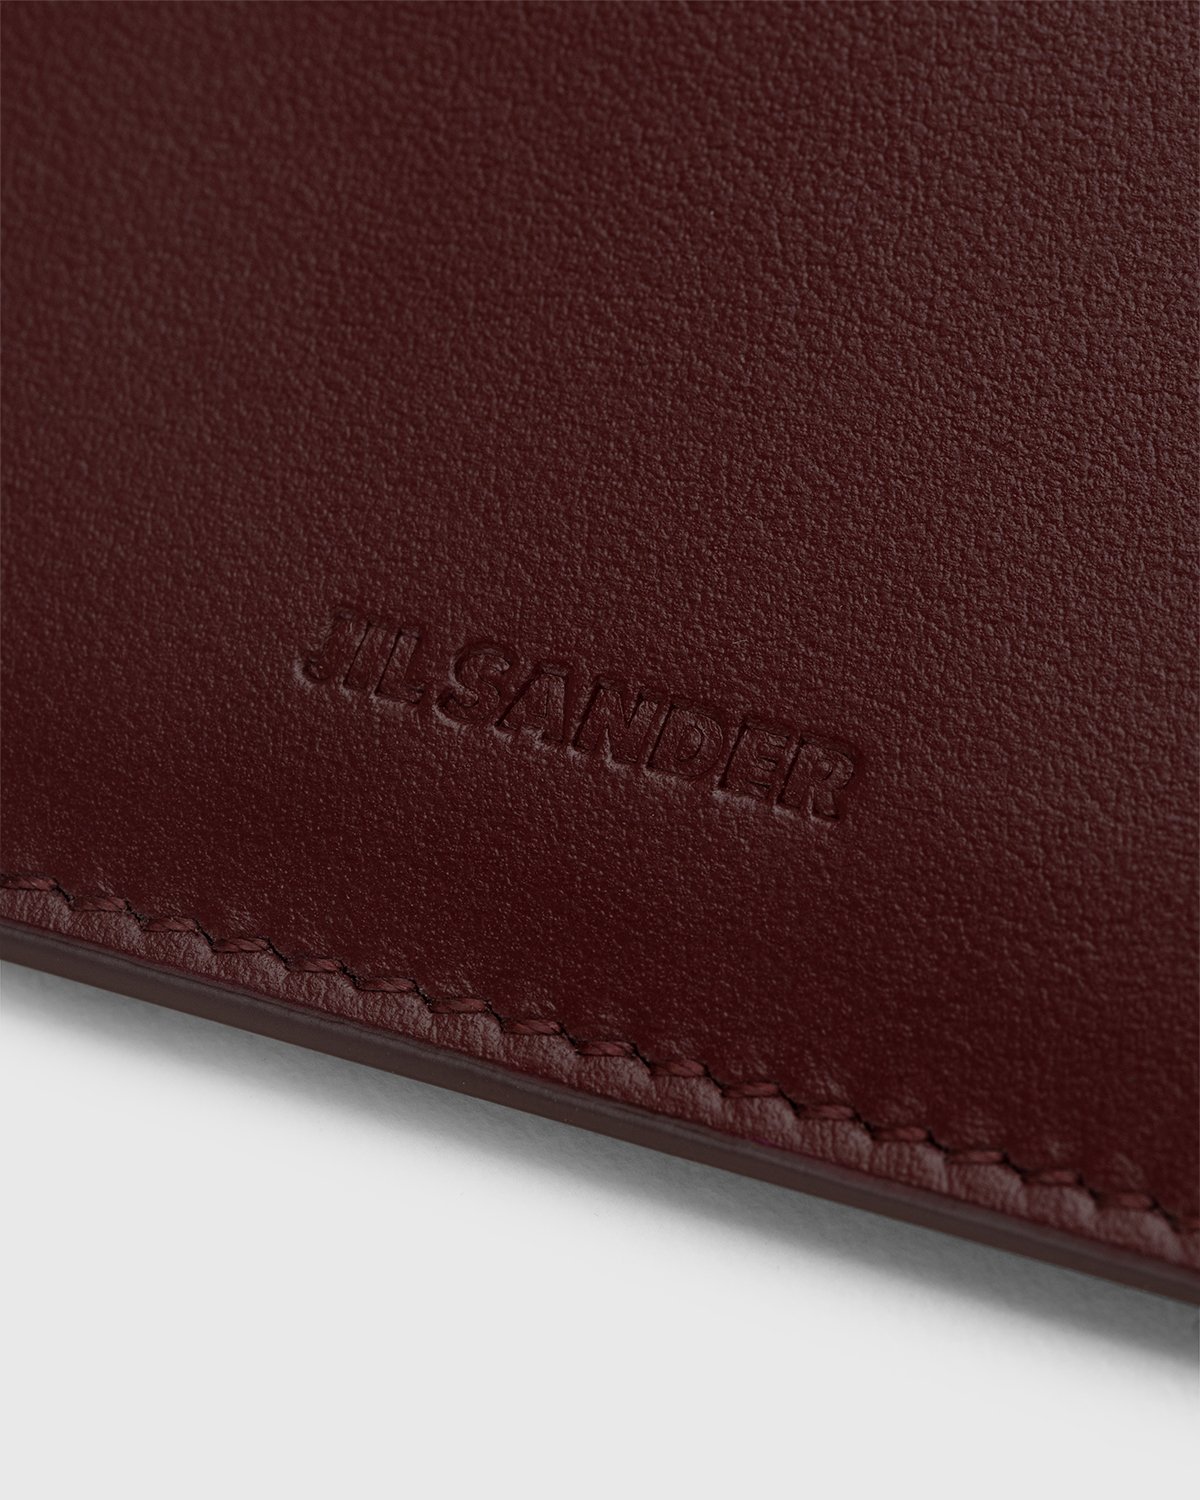 Jil Sander - Leather Card Holder Dark Red - Accessories - Red - Image 4